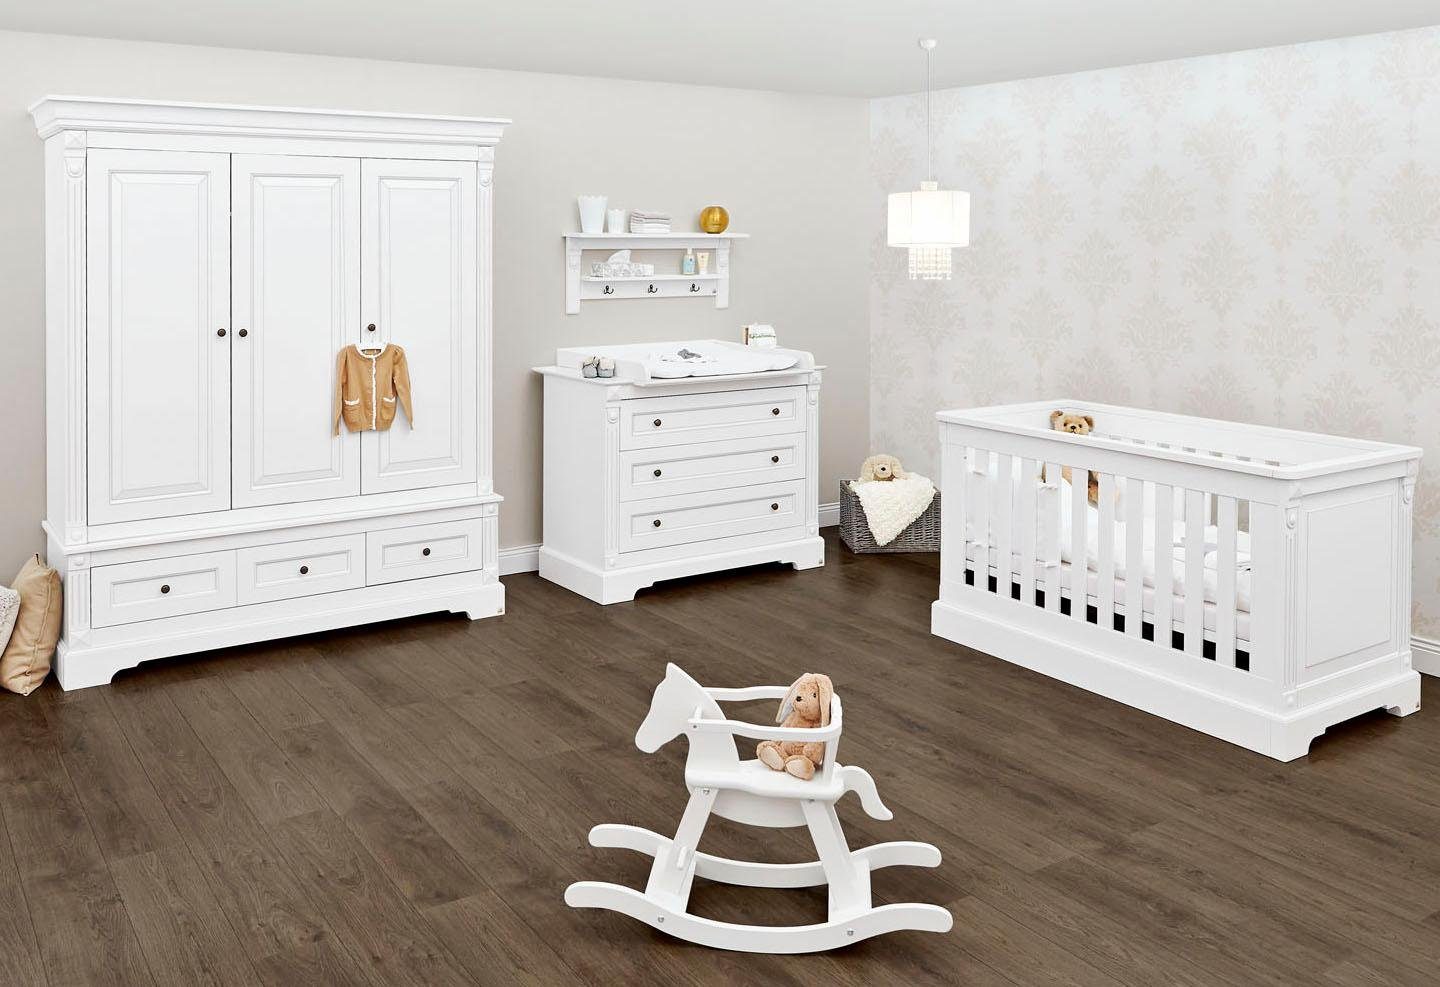 Pinolino® Complete babykamerset Emilia breed groot, met kinderbed, kast en commode (set, 3 stuks)